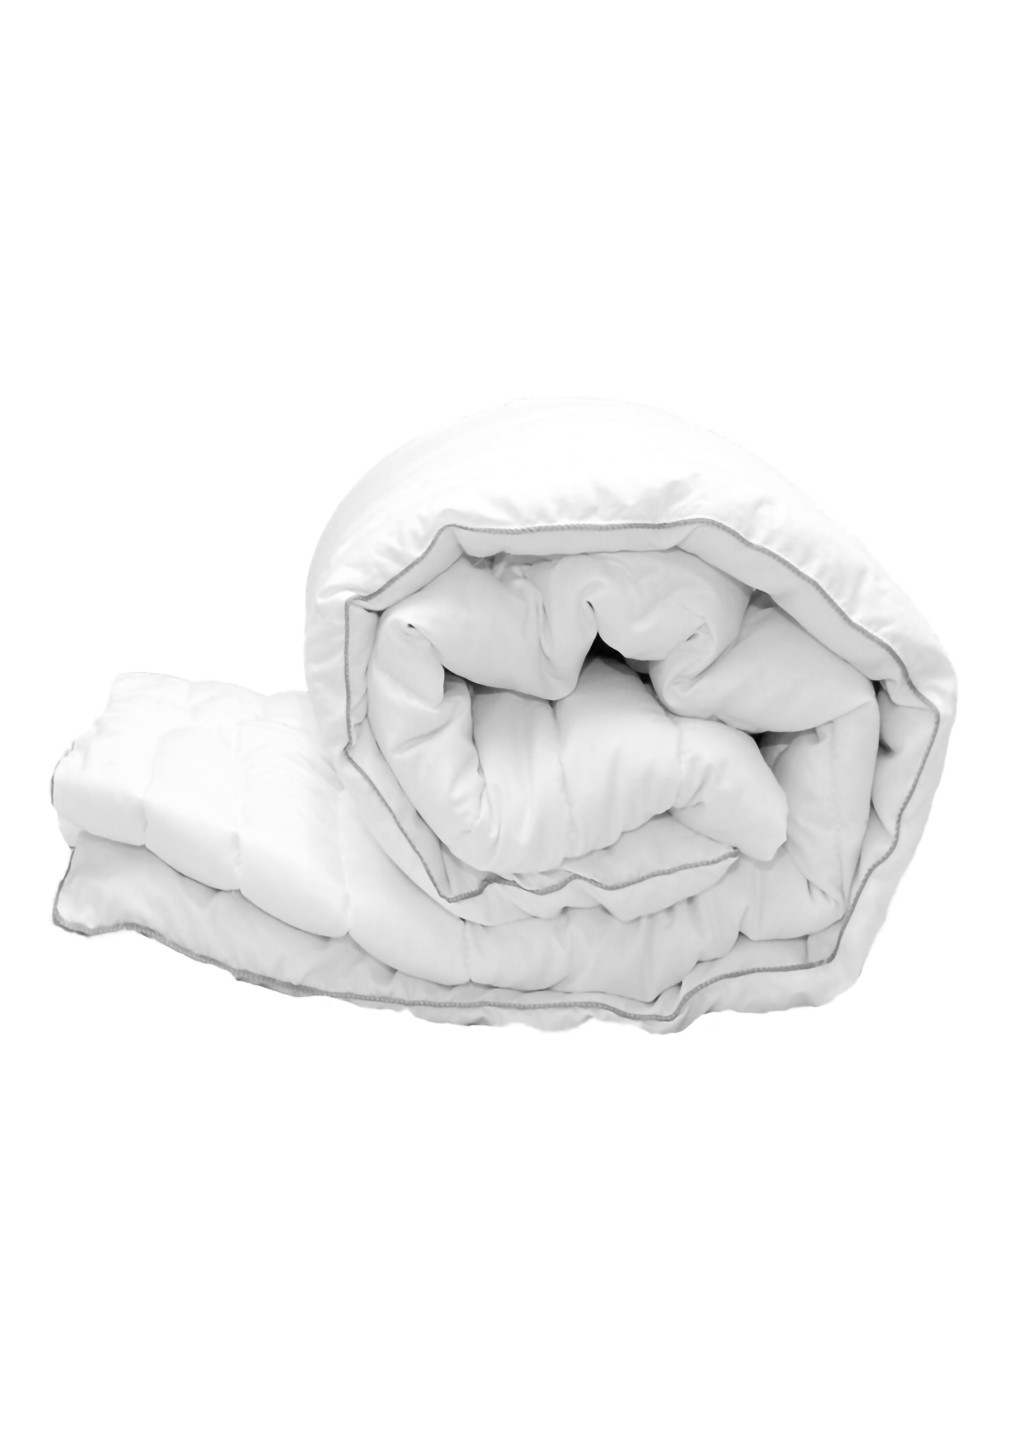 Одеяло лебяжий пух White евро Tag (254805699)